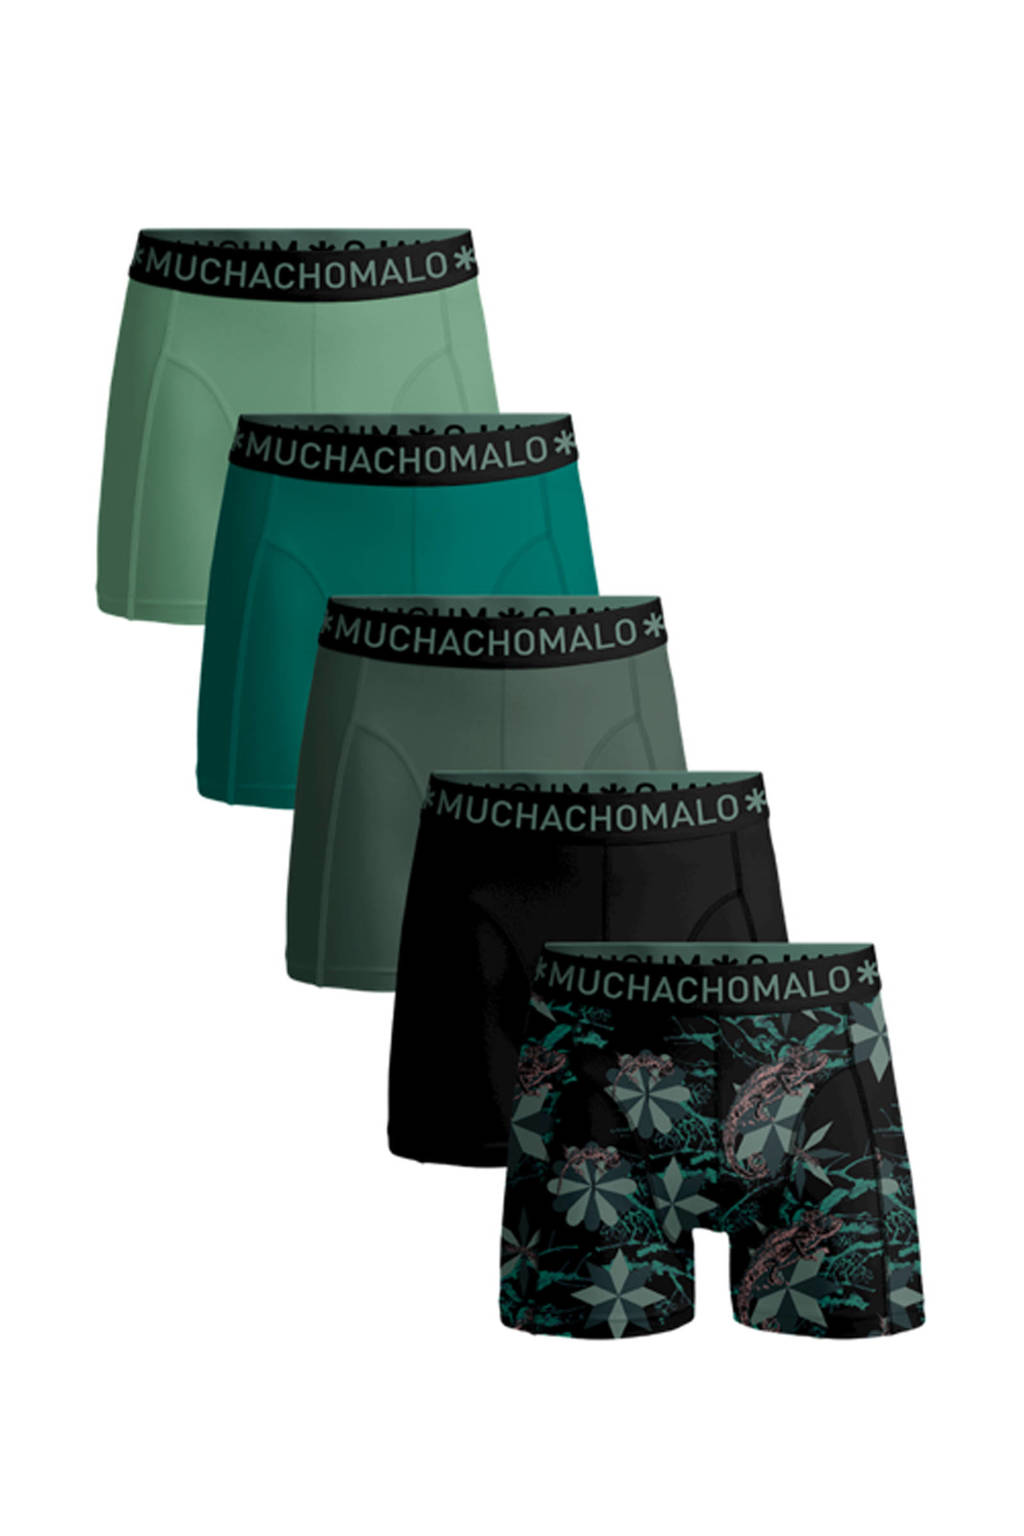 Muchachomalo boxershort (set van 5), Groen/Kaki/Zwart